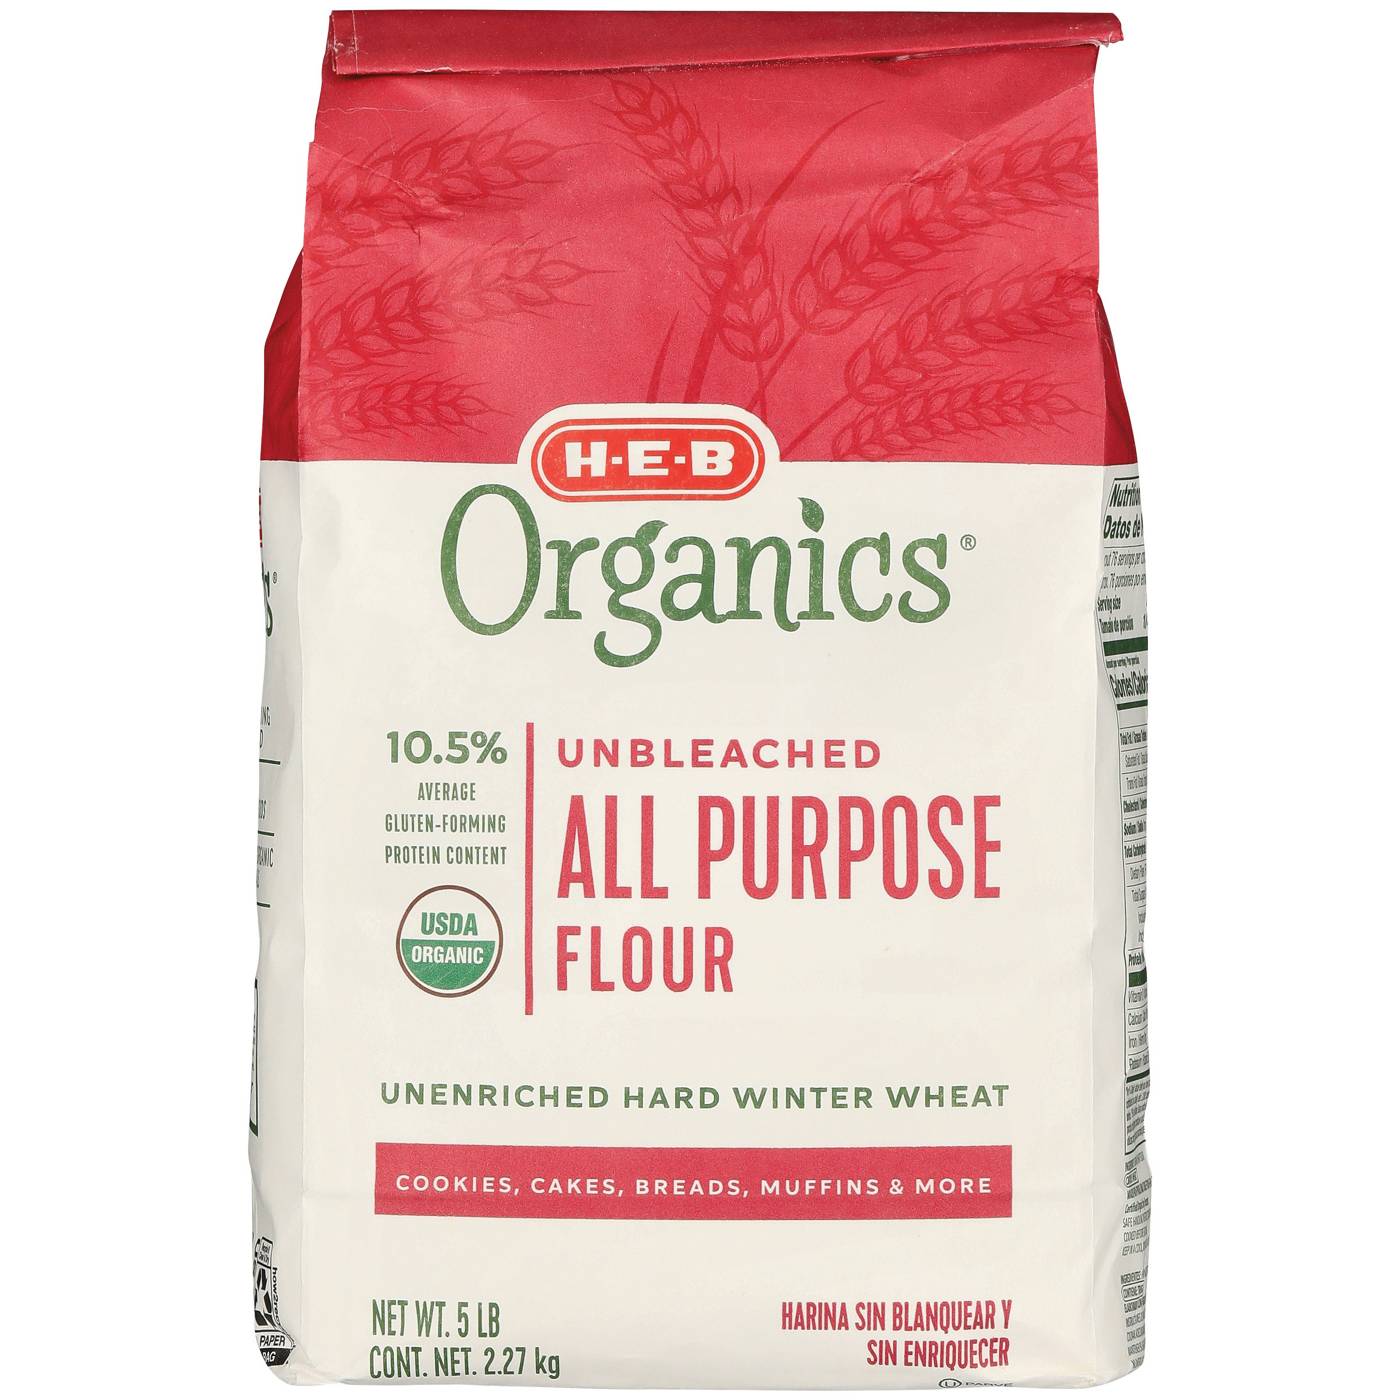 H-E-B Organics Unbleached All Purpose Flour; image 1 of 2